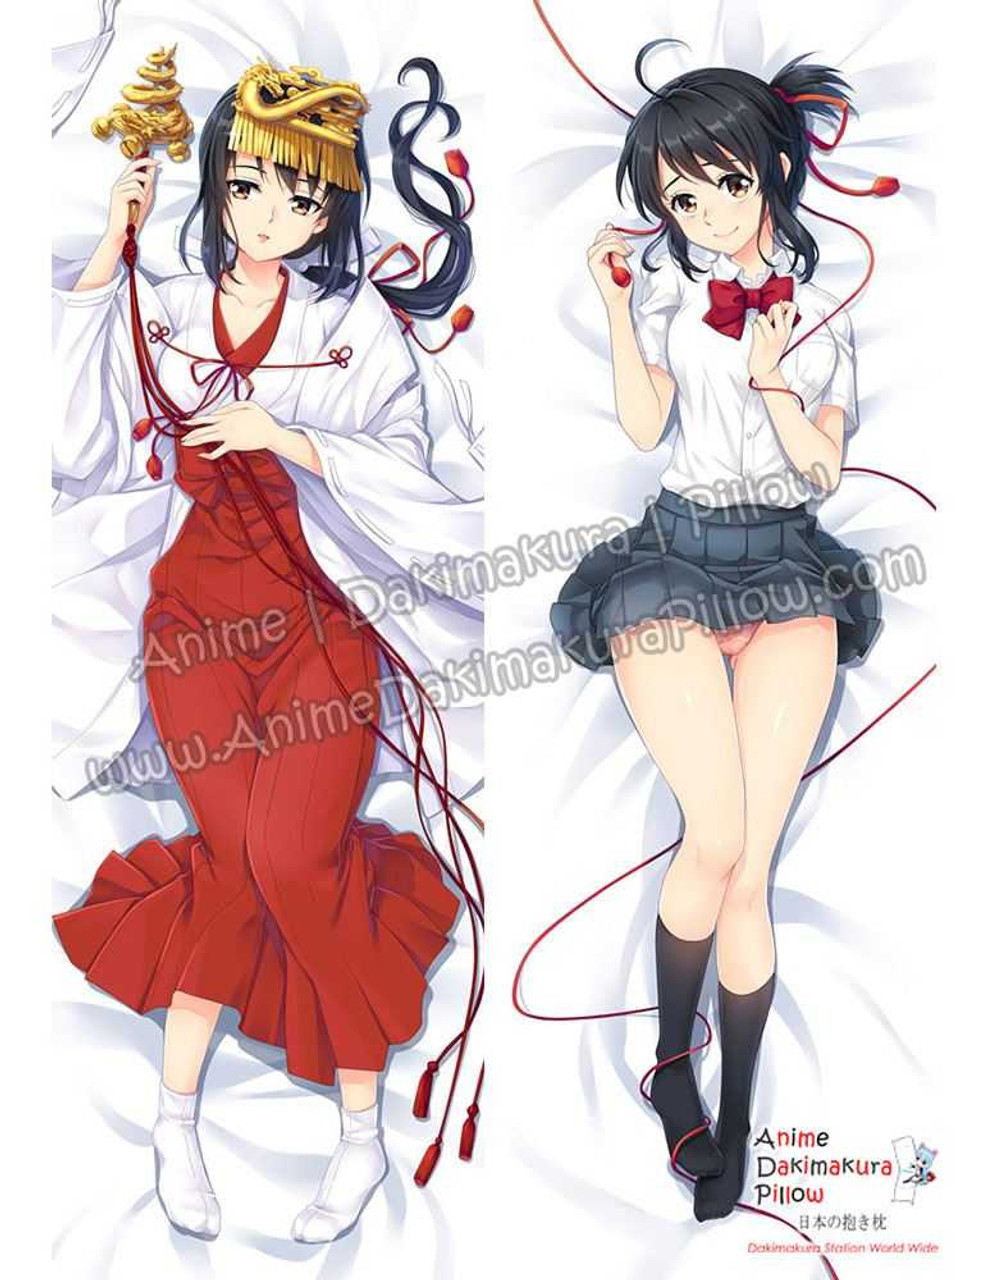 Sexy Body Hug Pillowcase Cover, Anime Manga Cover, New Kimi WA 008